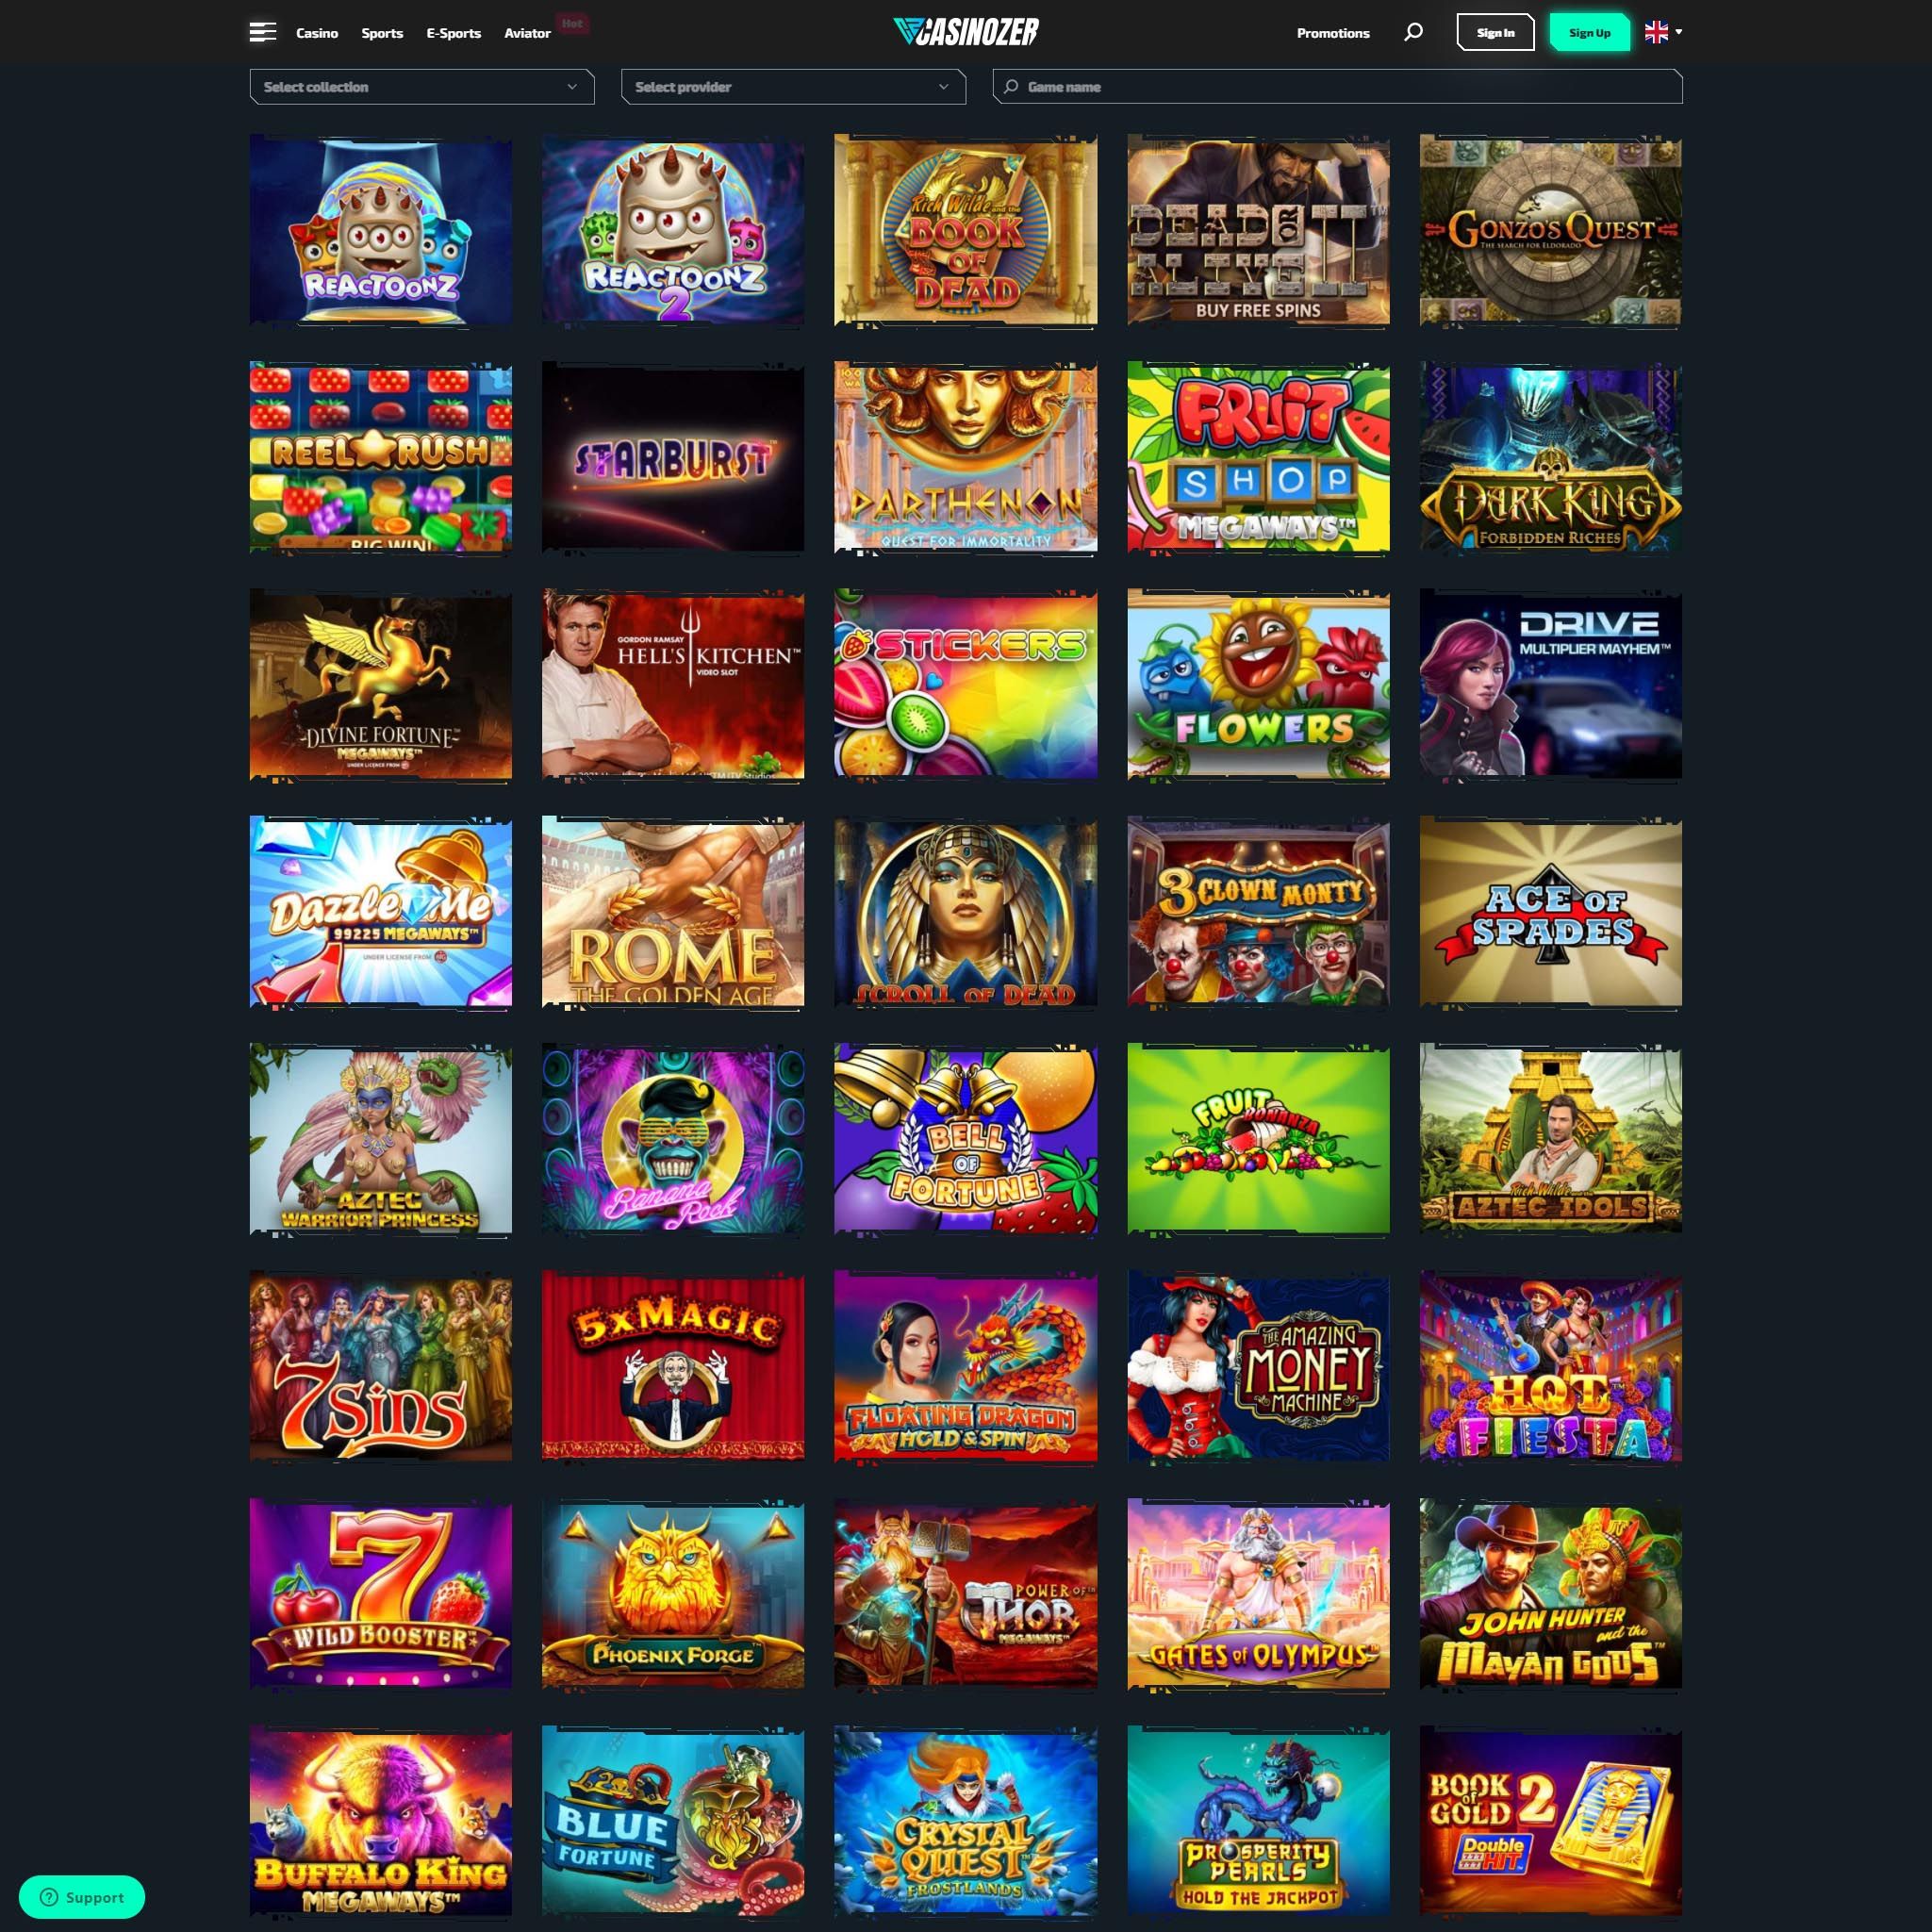 Casinozer full games catalogue